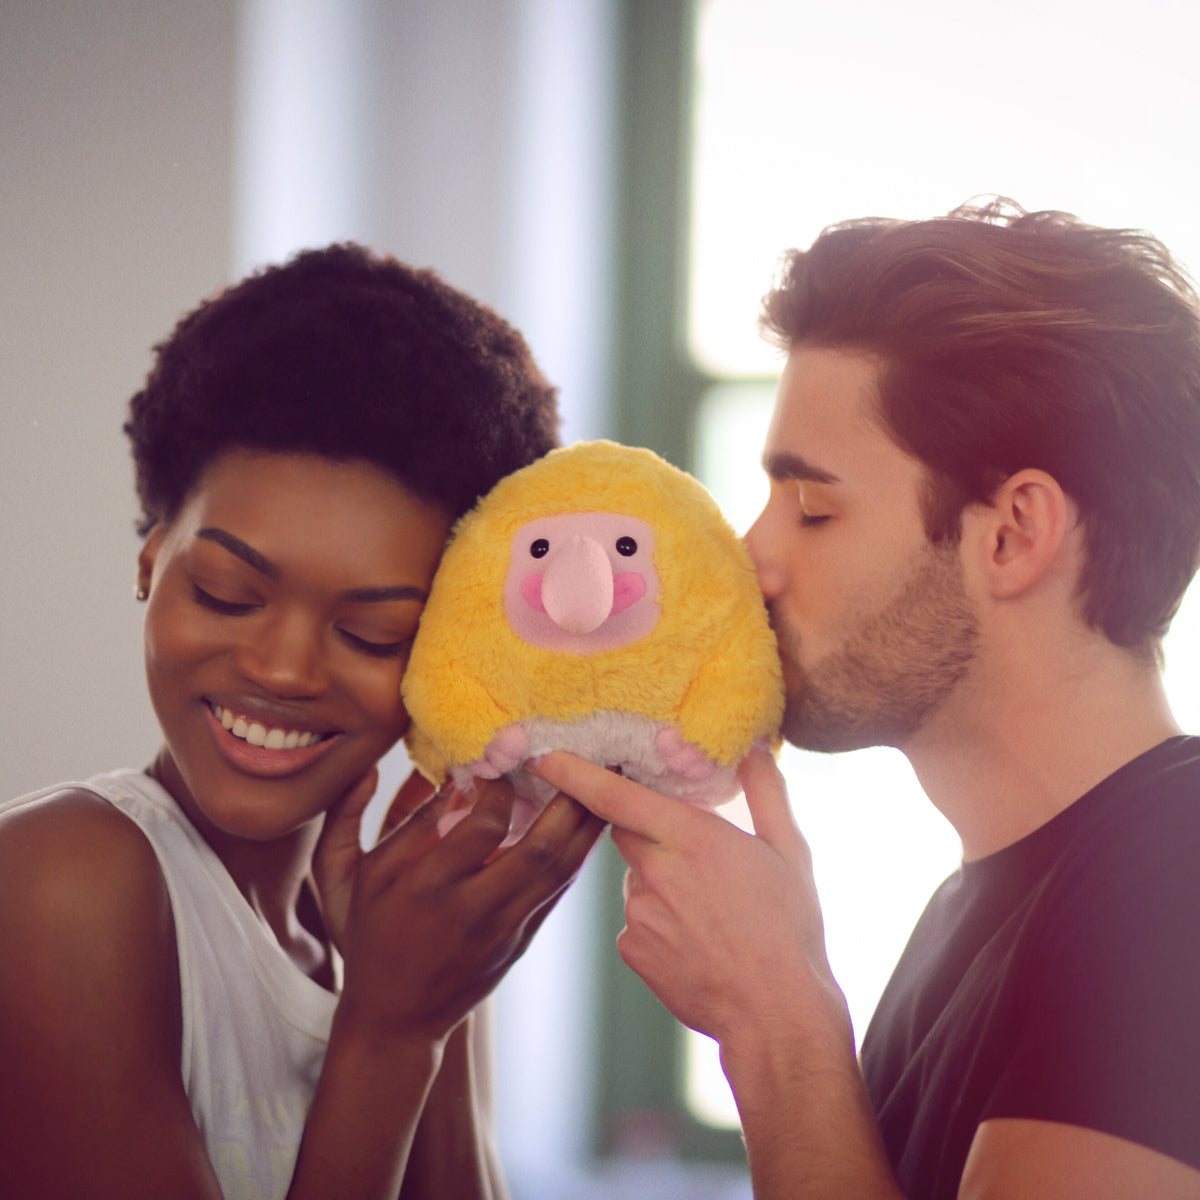 Proboscis Monkey - cute stuffed toy